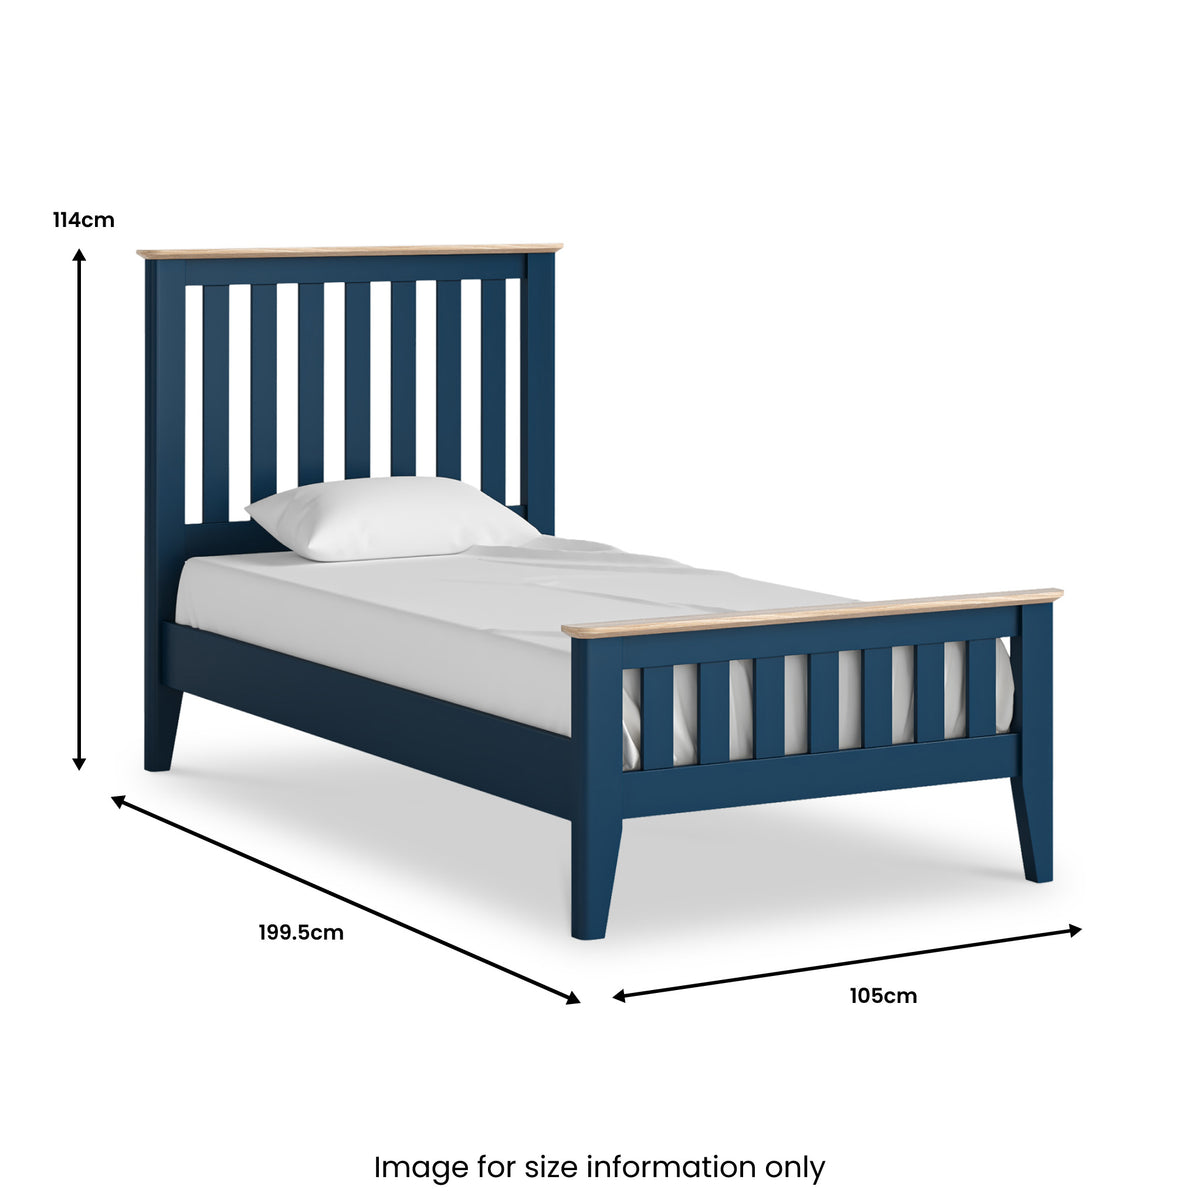 Penrose Single Slatted Bed Dimensions